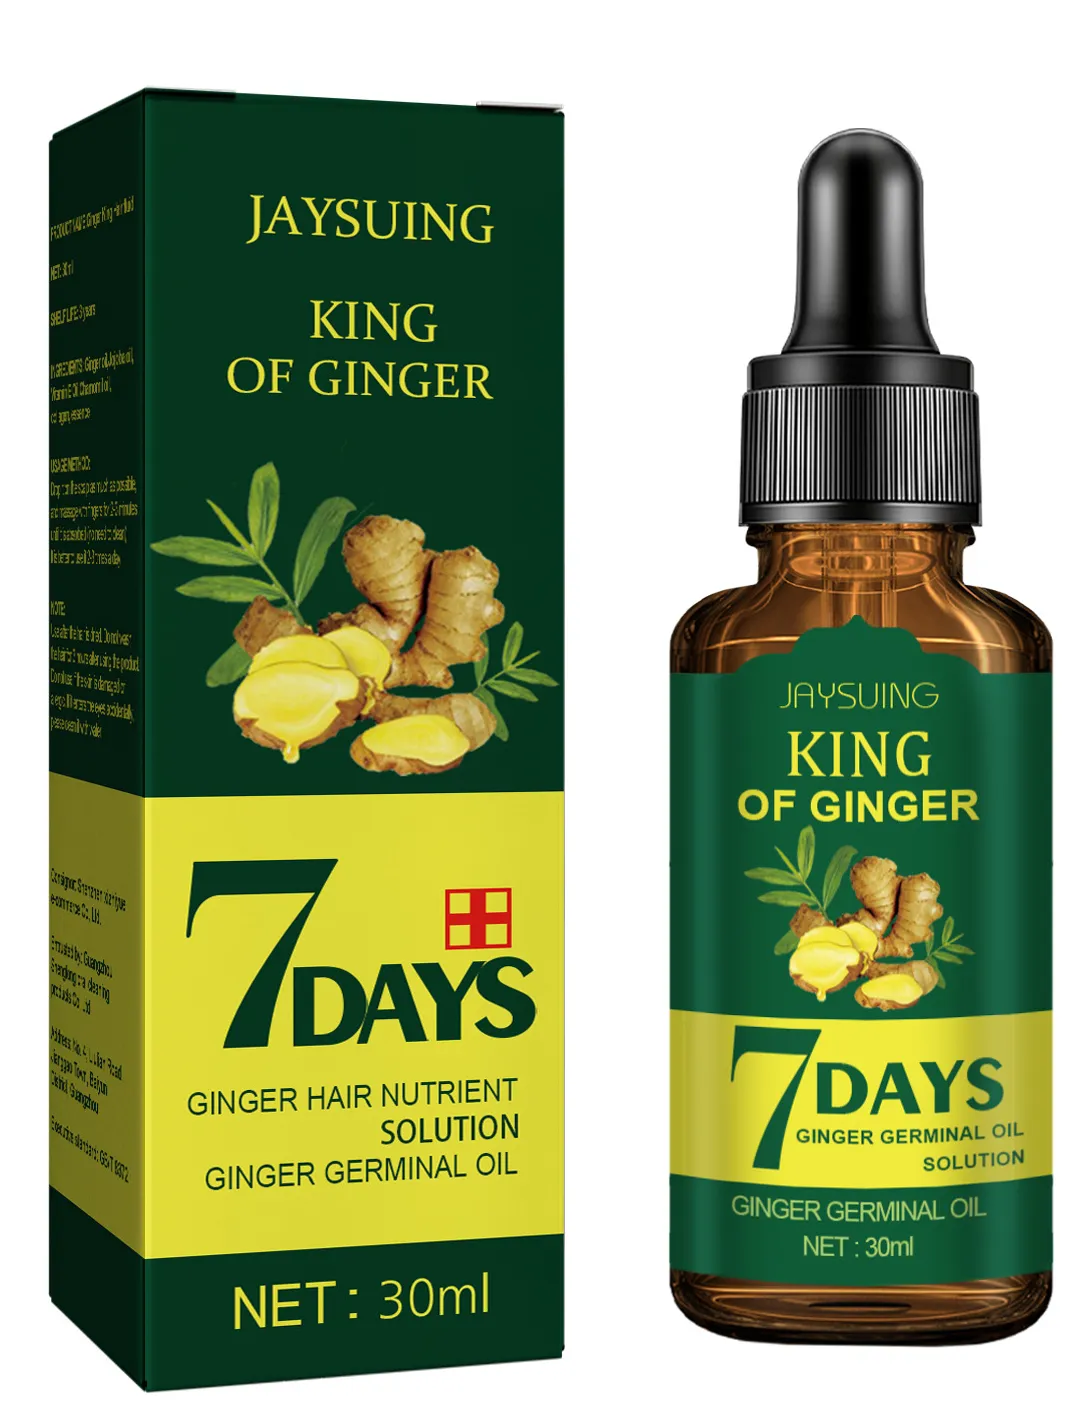 Solución para tratamiento del cabello durante 7 días, aceite esencial para evitar la pérdida de cabello con jengibre